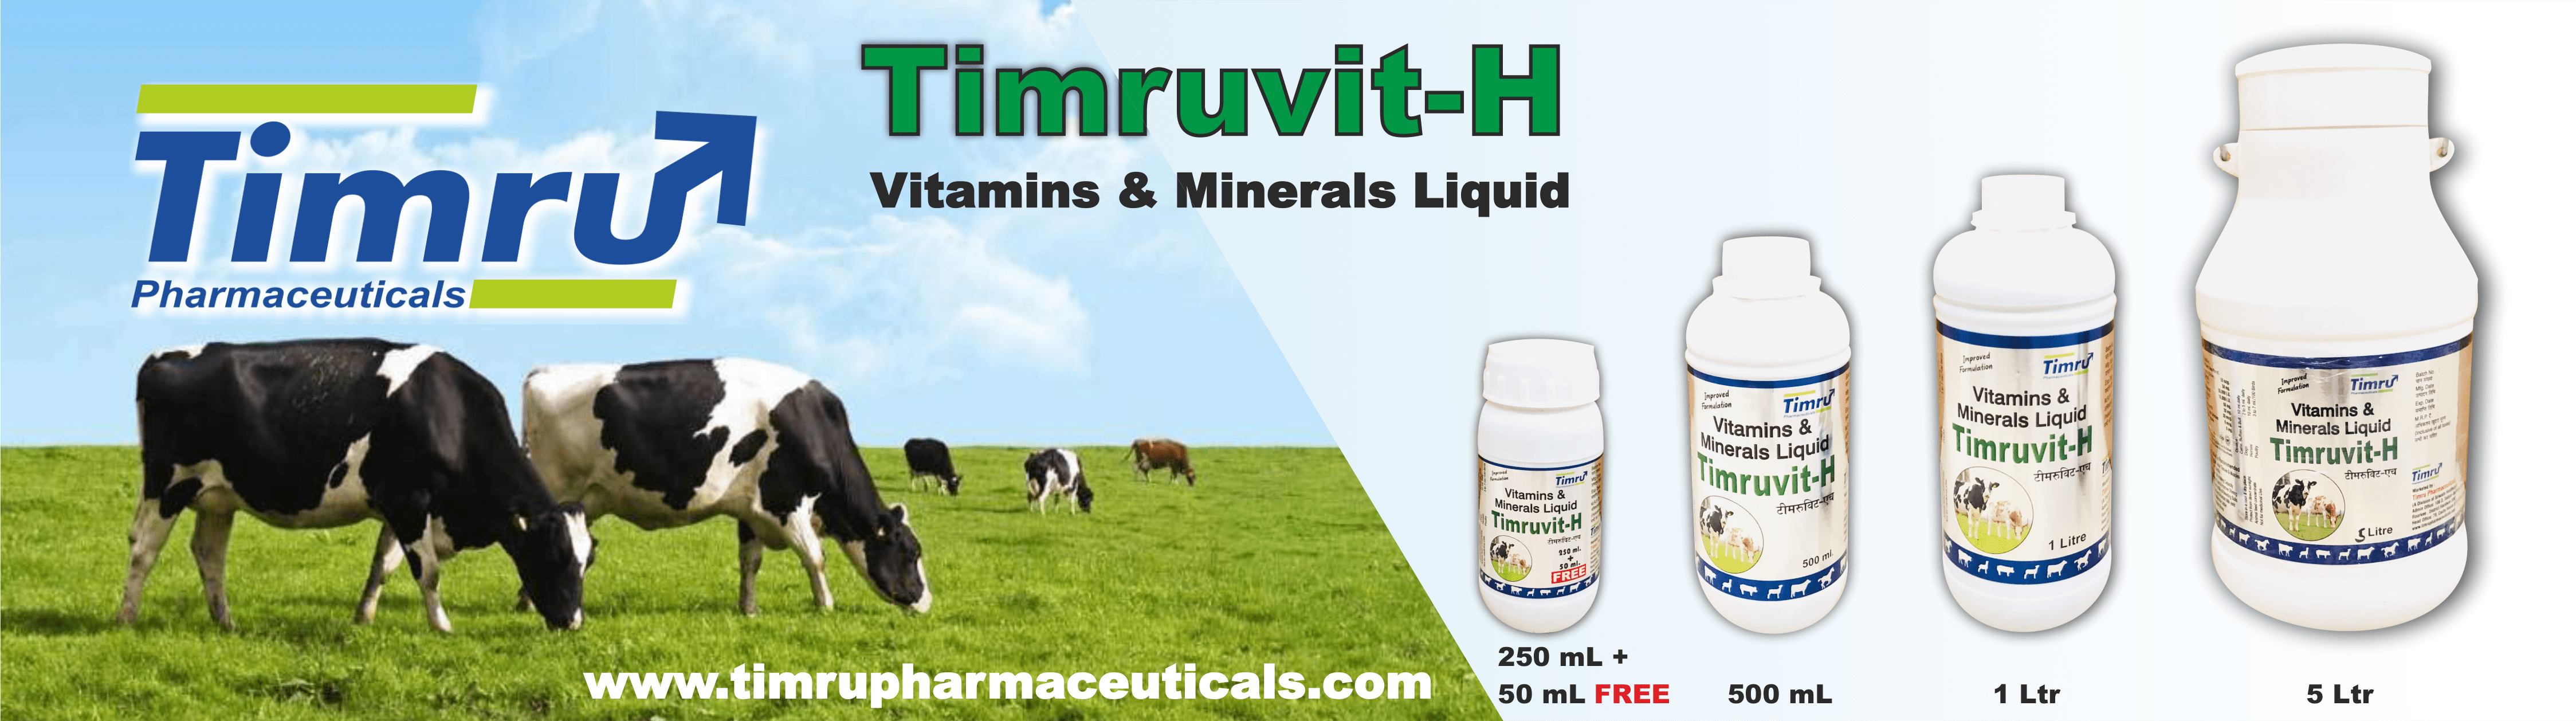 Veterinary Vitamin-H Liquid